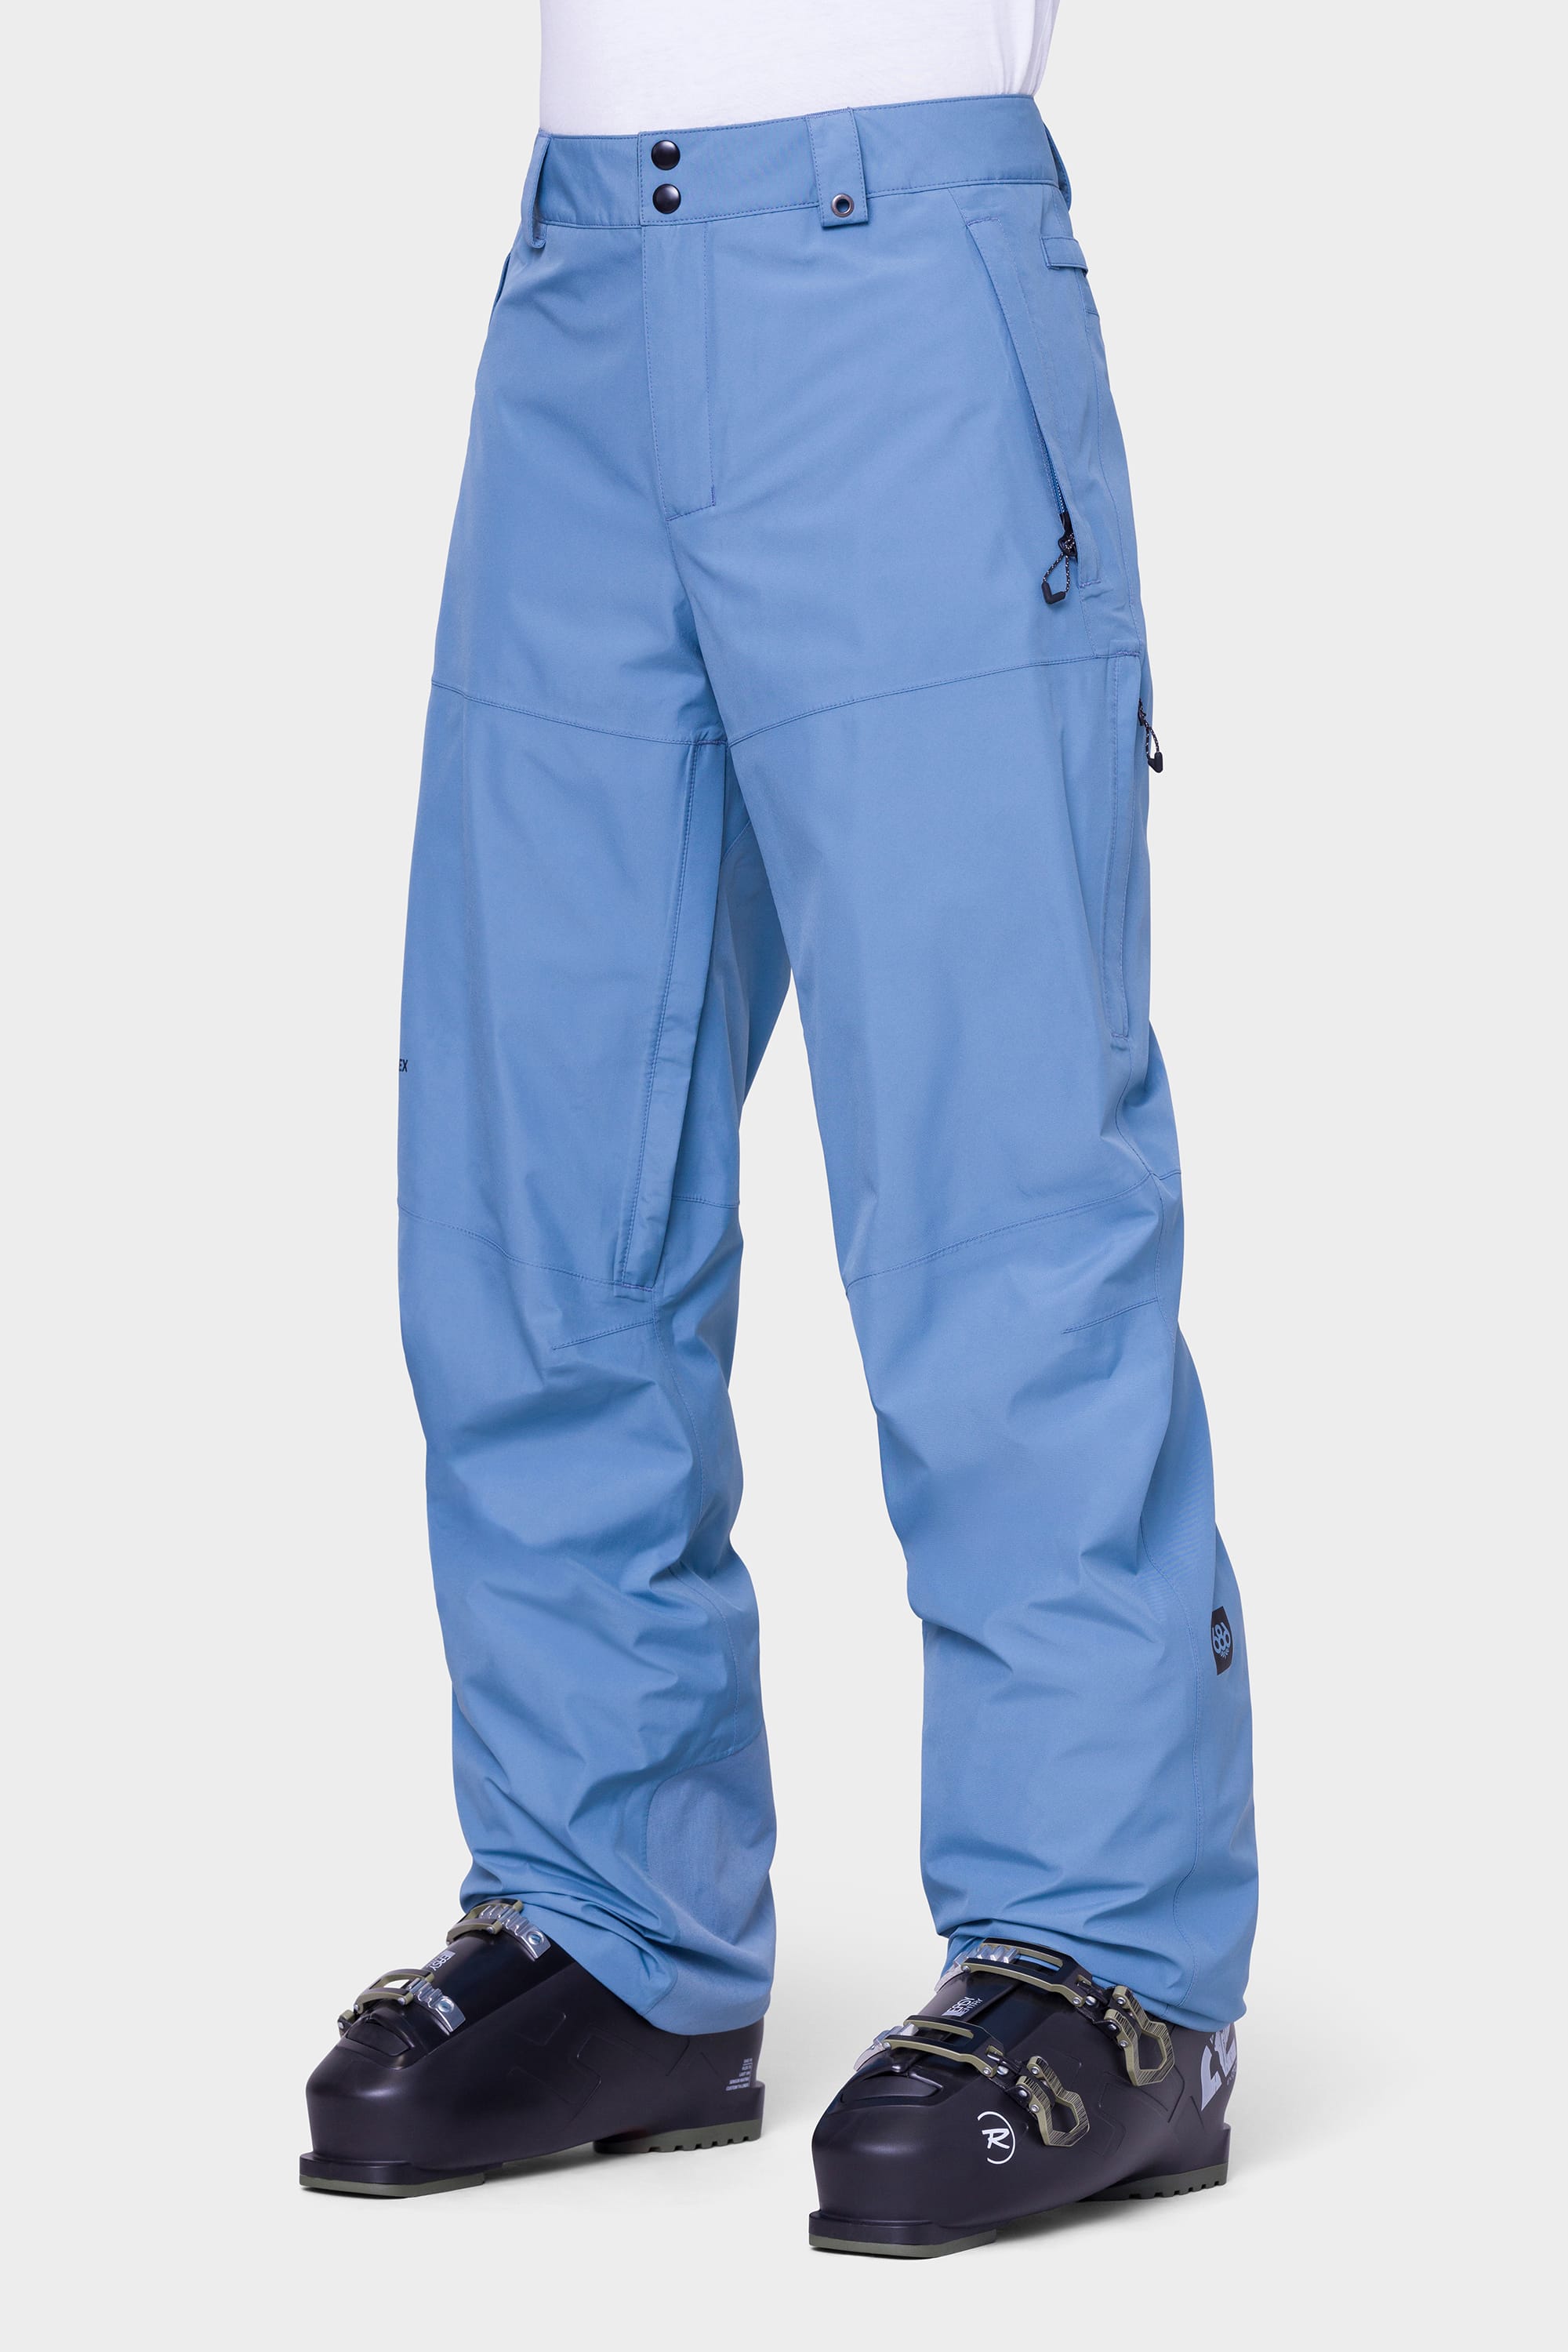 Men's Dark Blue Relaxed Fit Waterproof Membrane Jeans